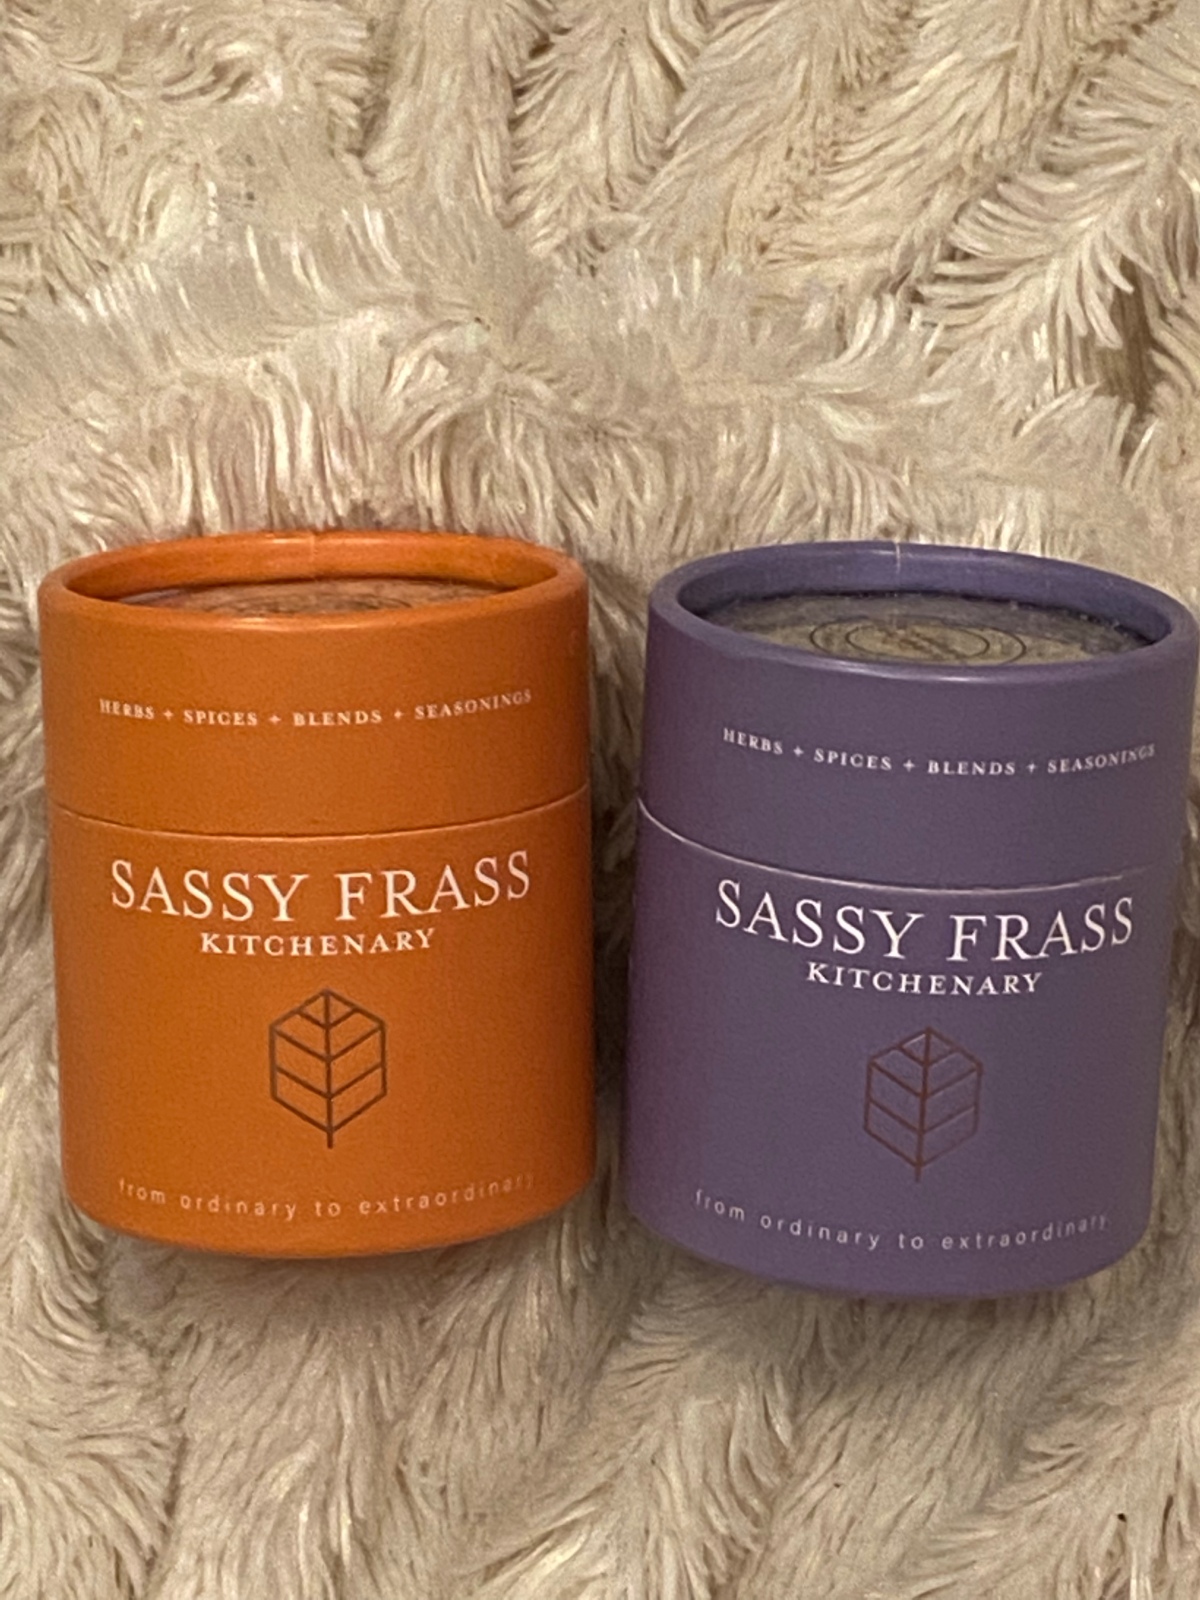 Vendor Feature: Sassy Frass Kitchenary